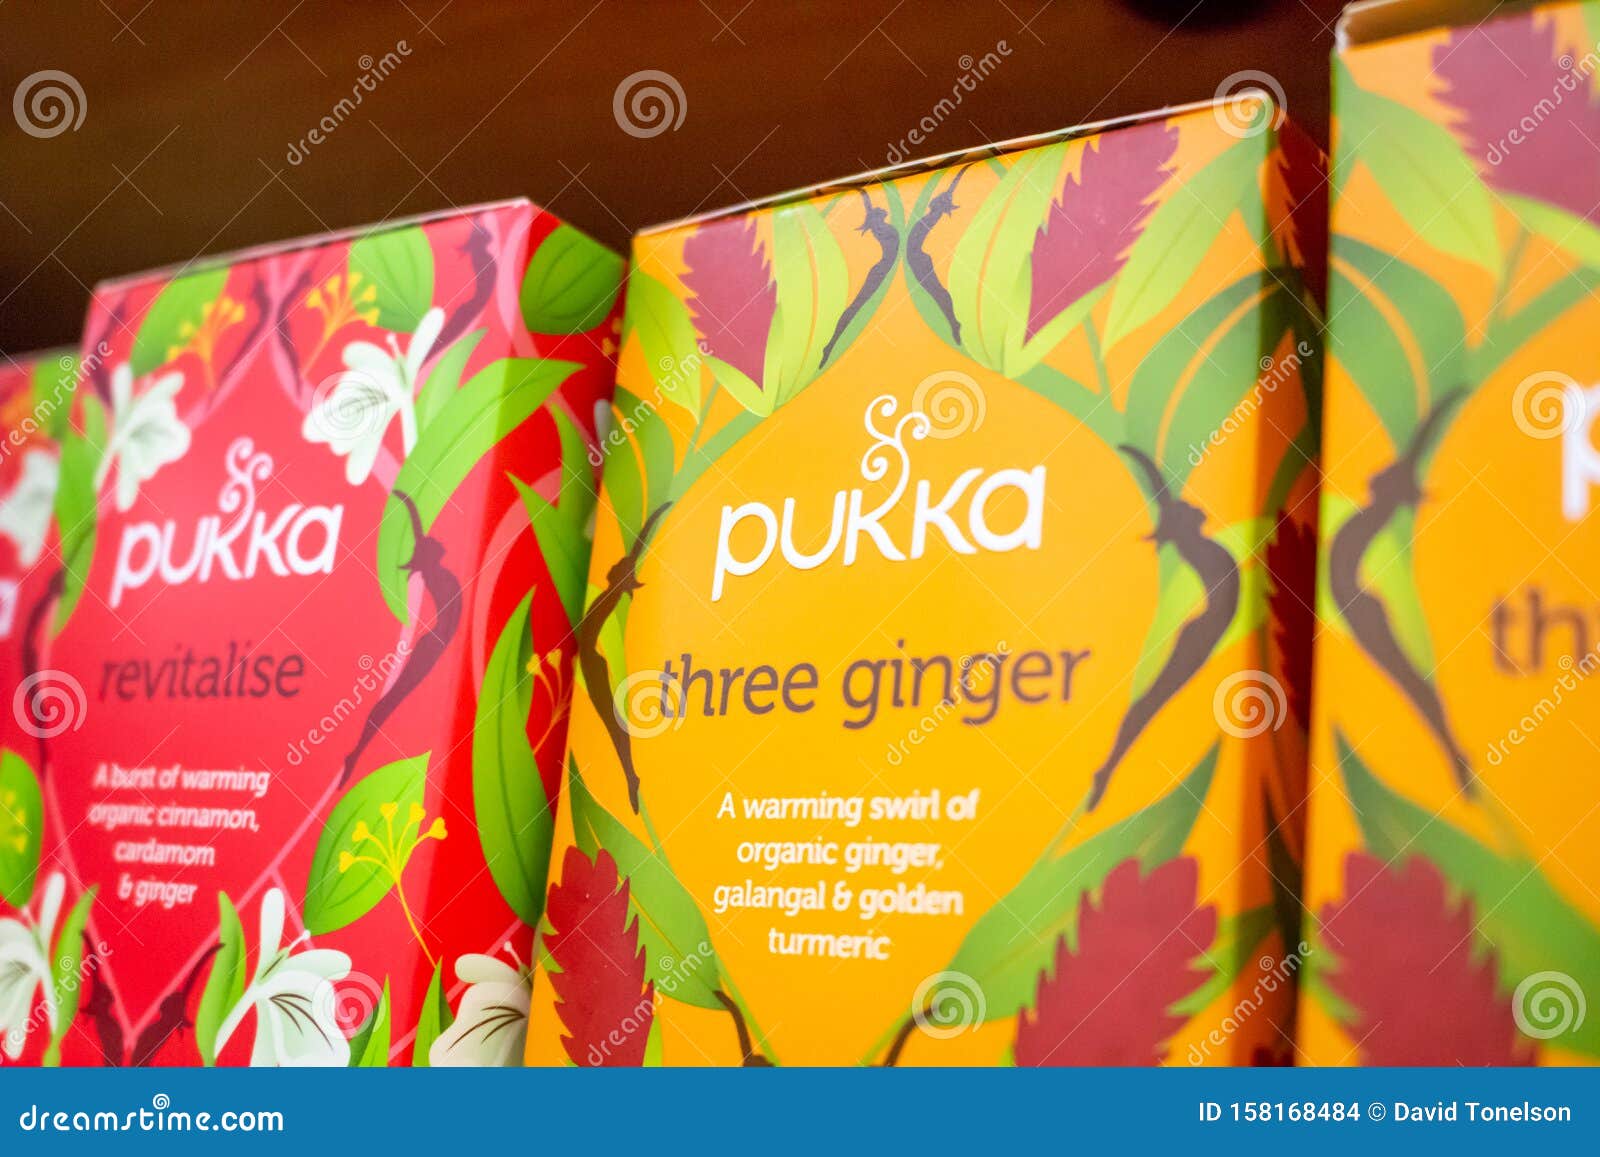 Pukka Organic Teas - Revitalize - Cinnamon, Cardamom & Ginger